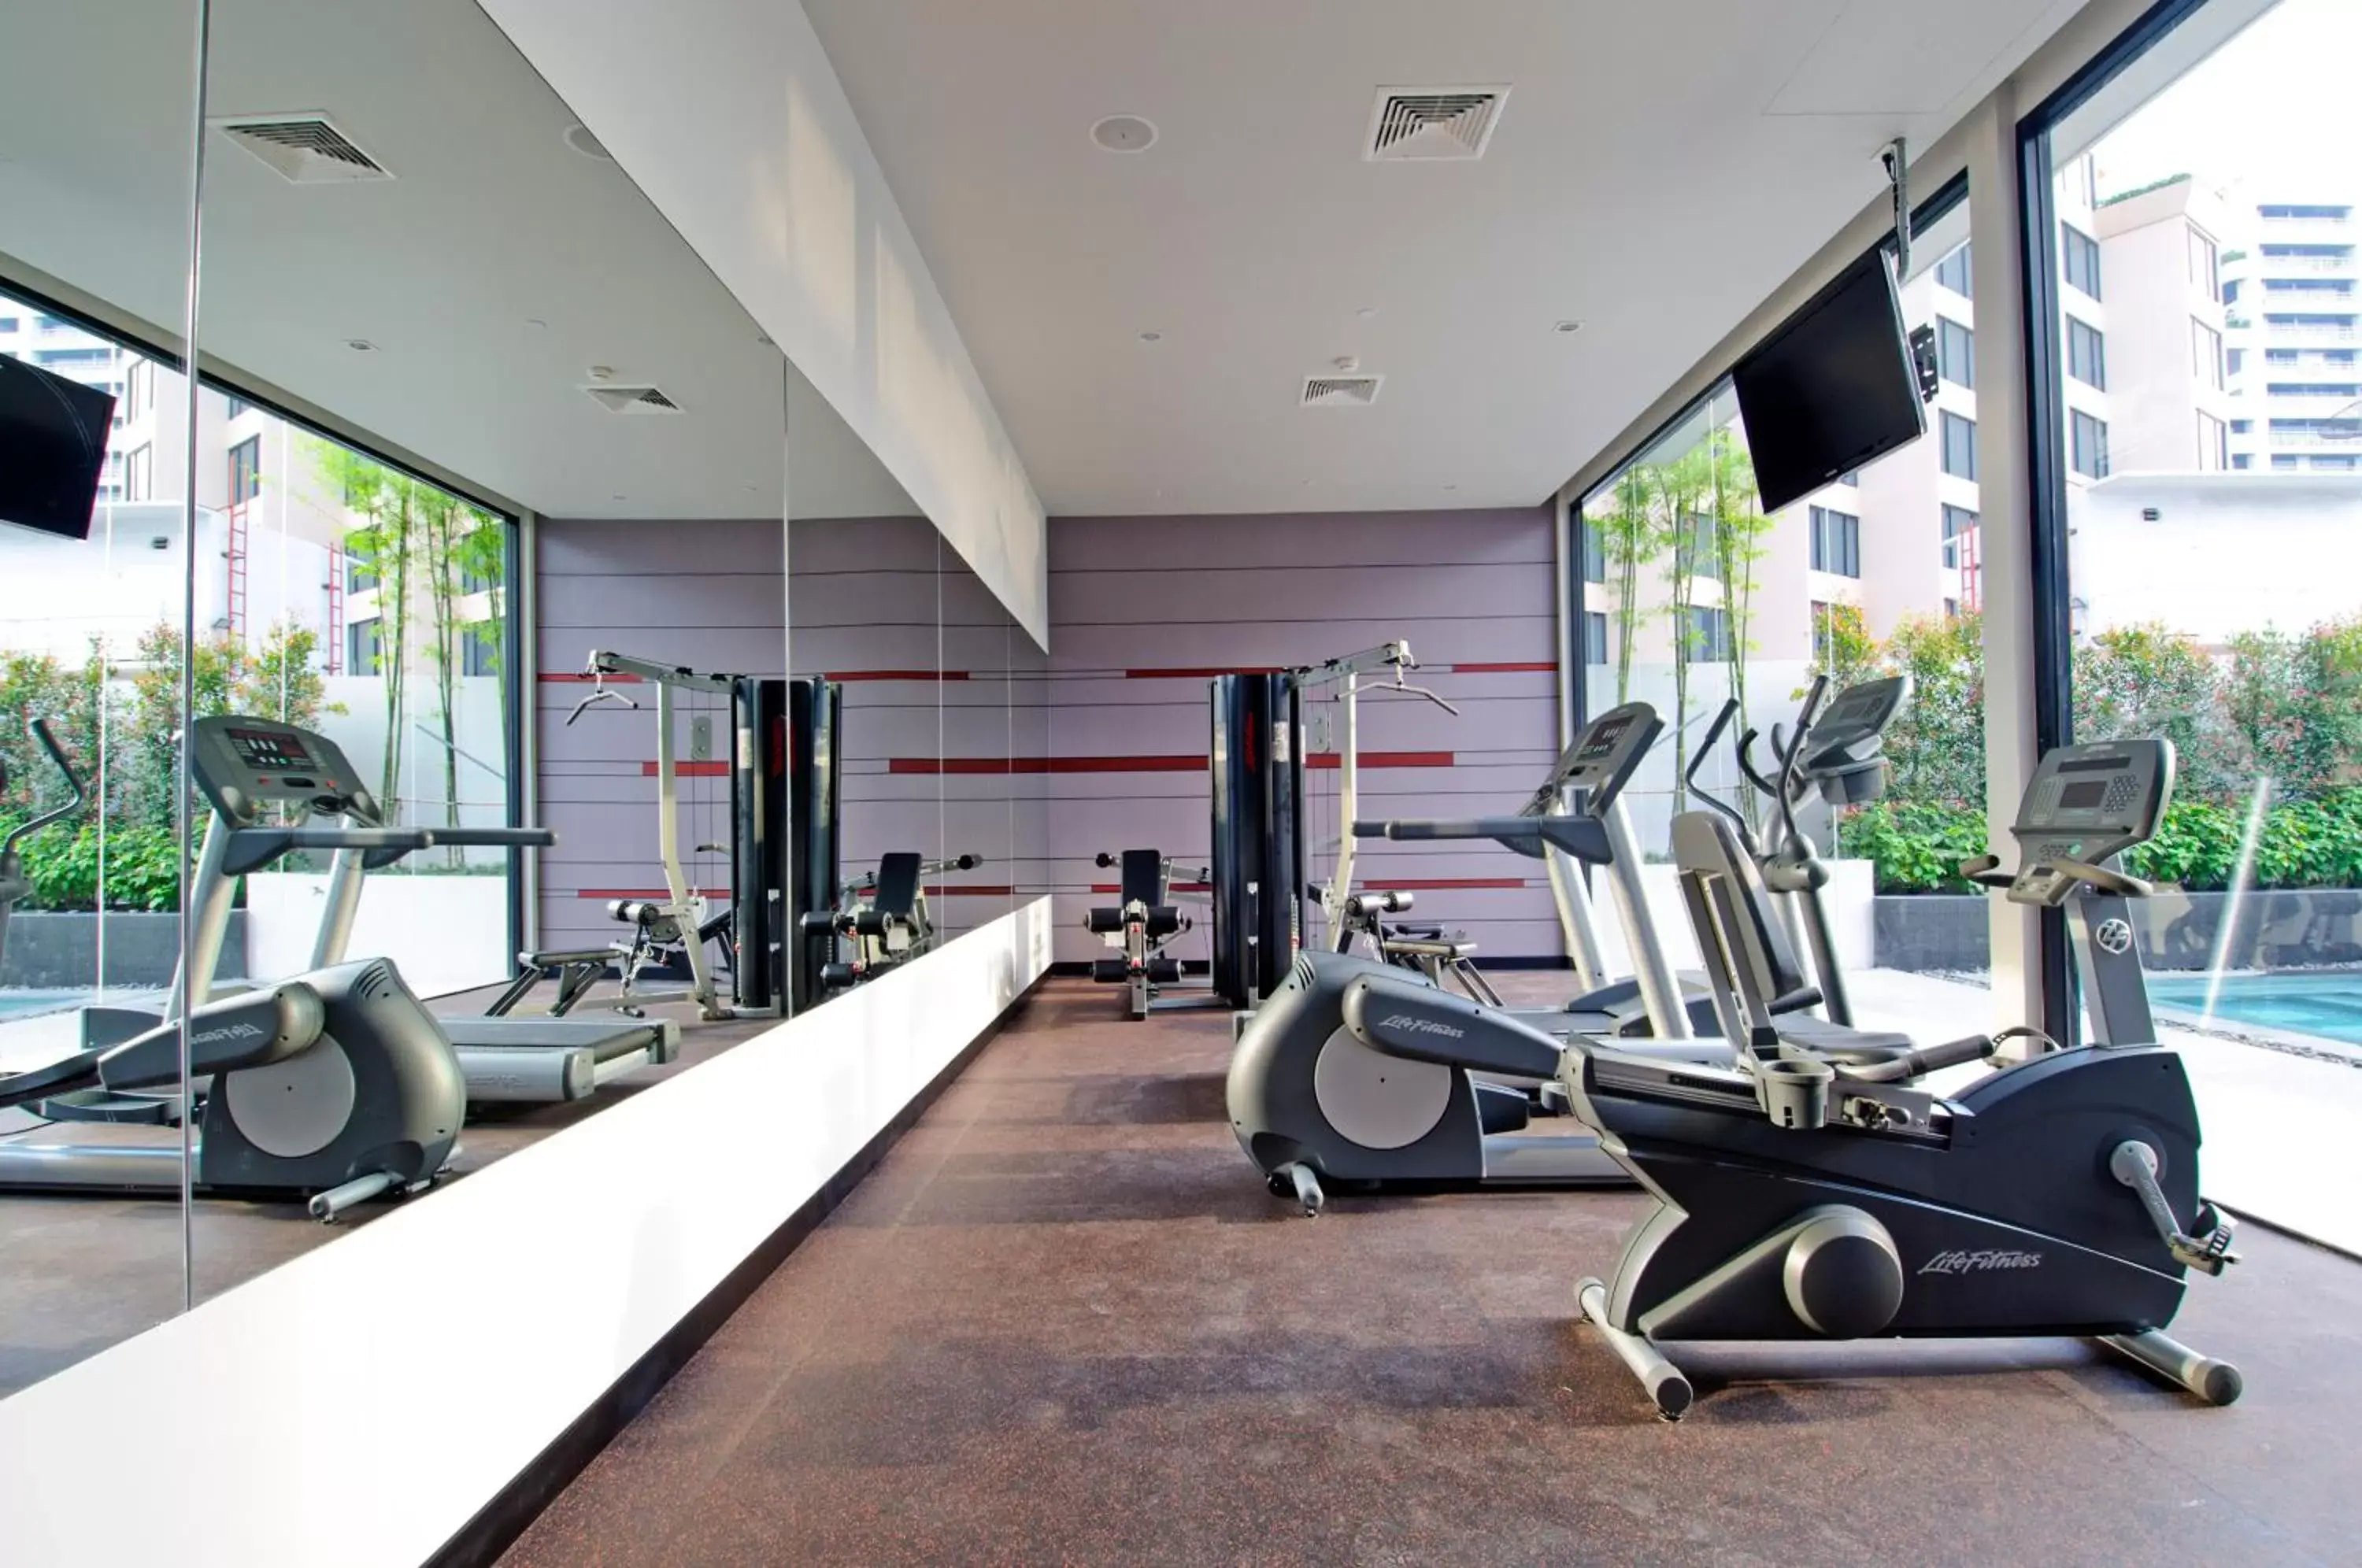 Fitness centre/facilities, Fitness Center/Facilities in Park Plaza Bangkok Soi 18